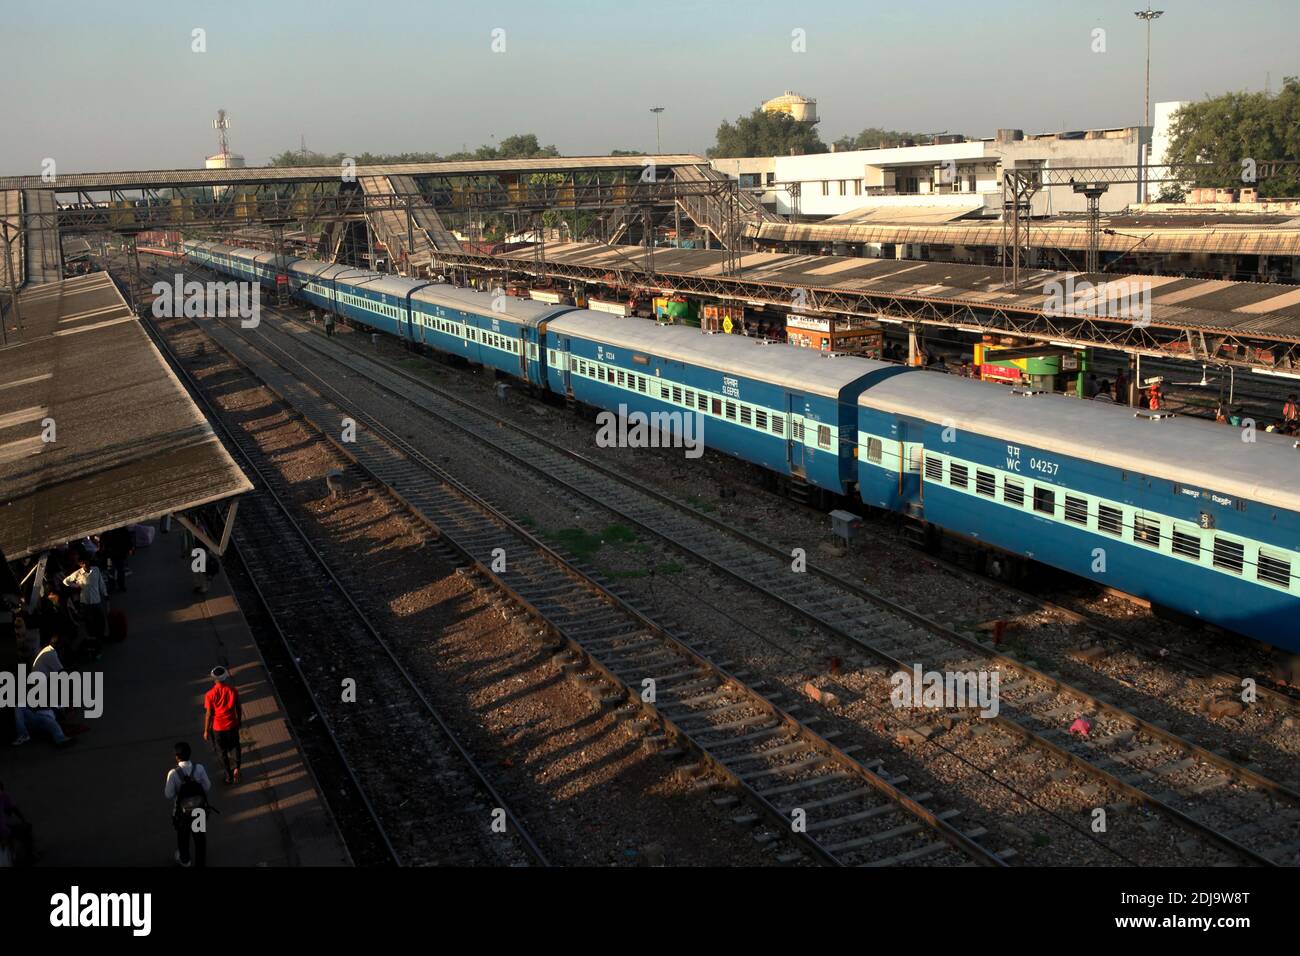 Railroad tracks, train, and morning view of New Delhi Railway Station in Delhi, India. Stock Photo